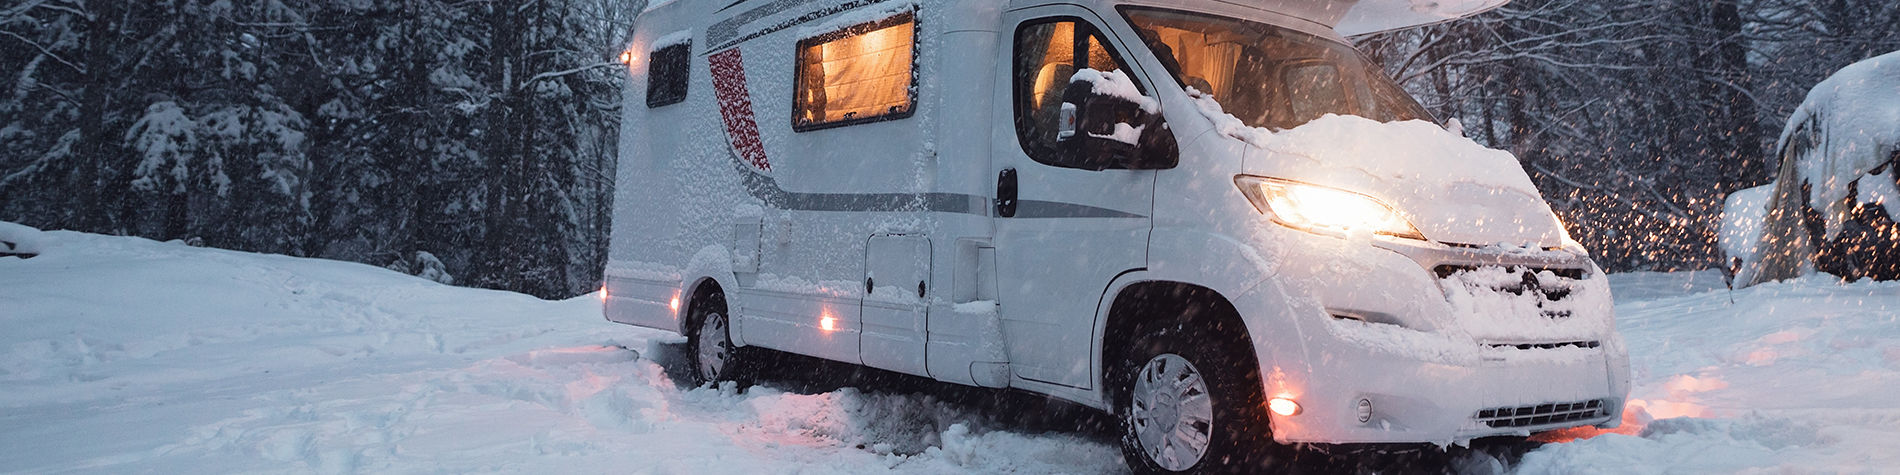 Bien choisir son chauffe-eau ou chaudière pour camping car ?